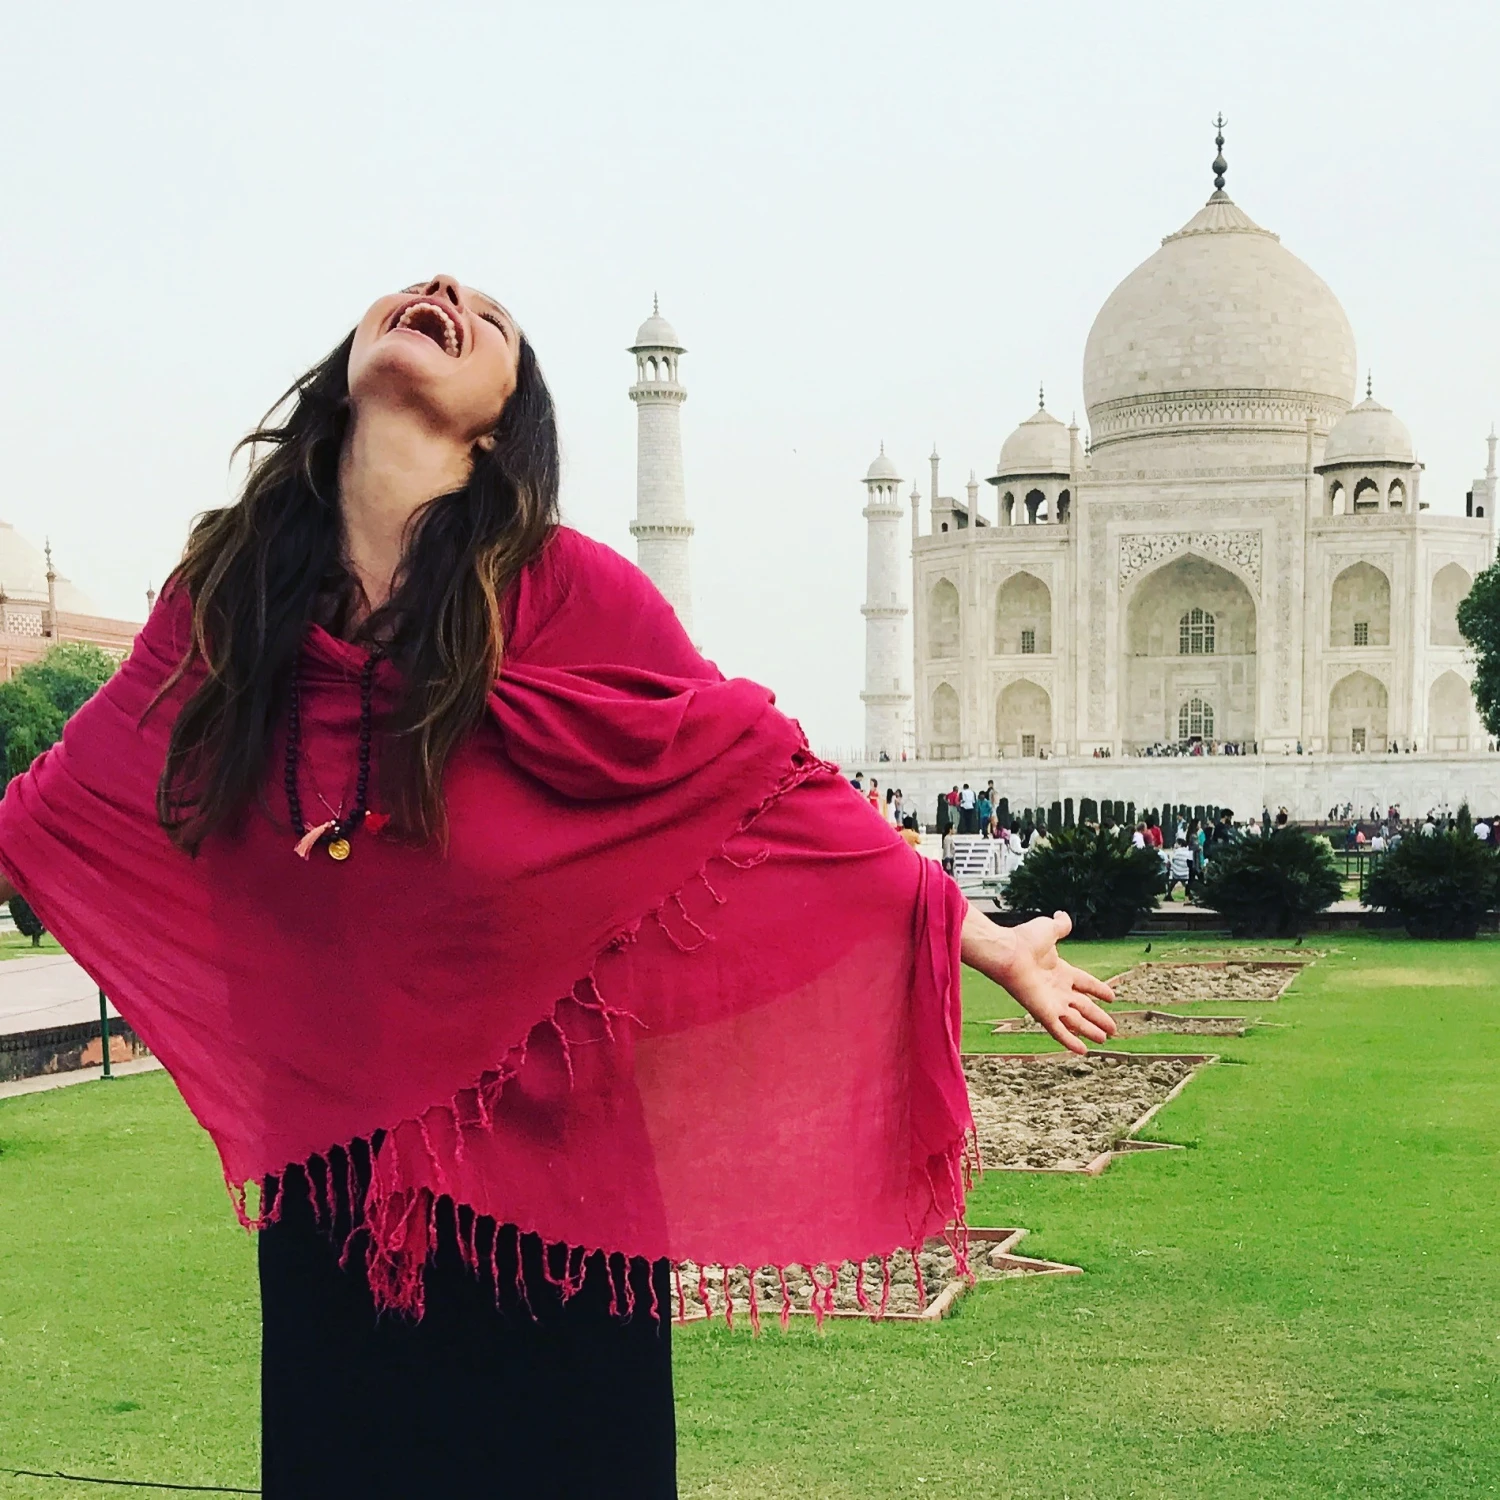 Can't miss Taj Mahal when in India